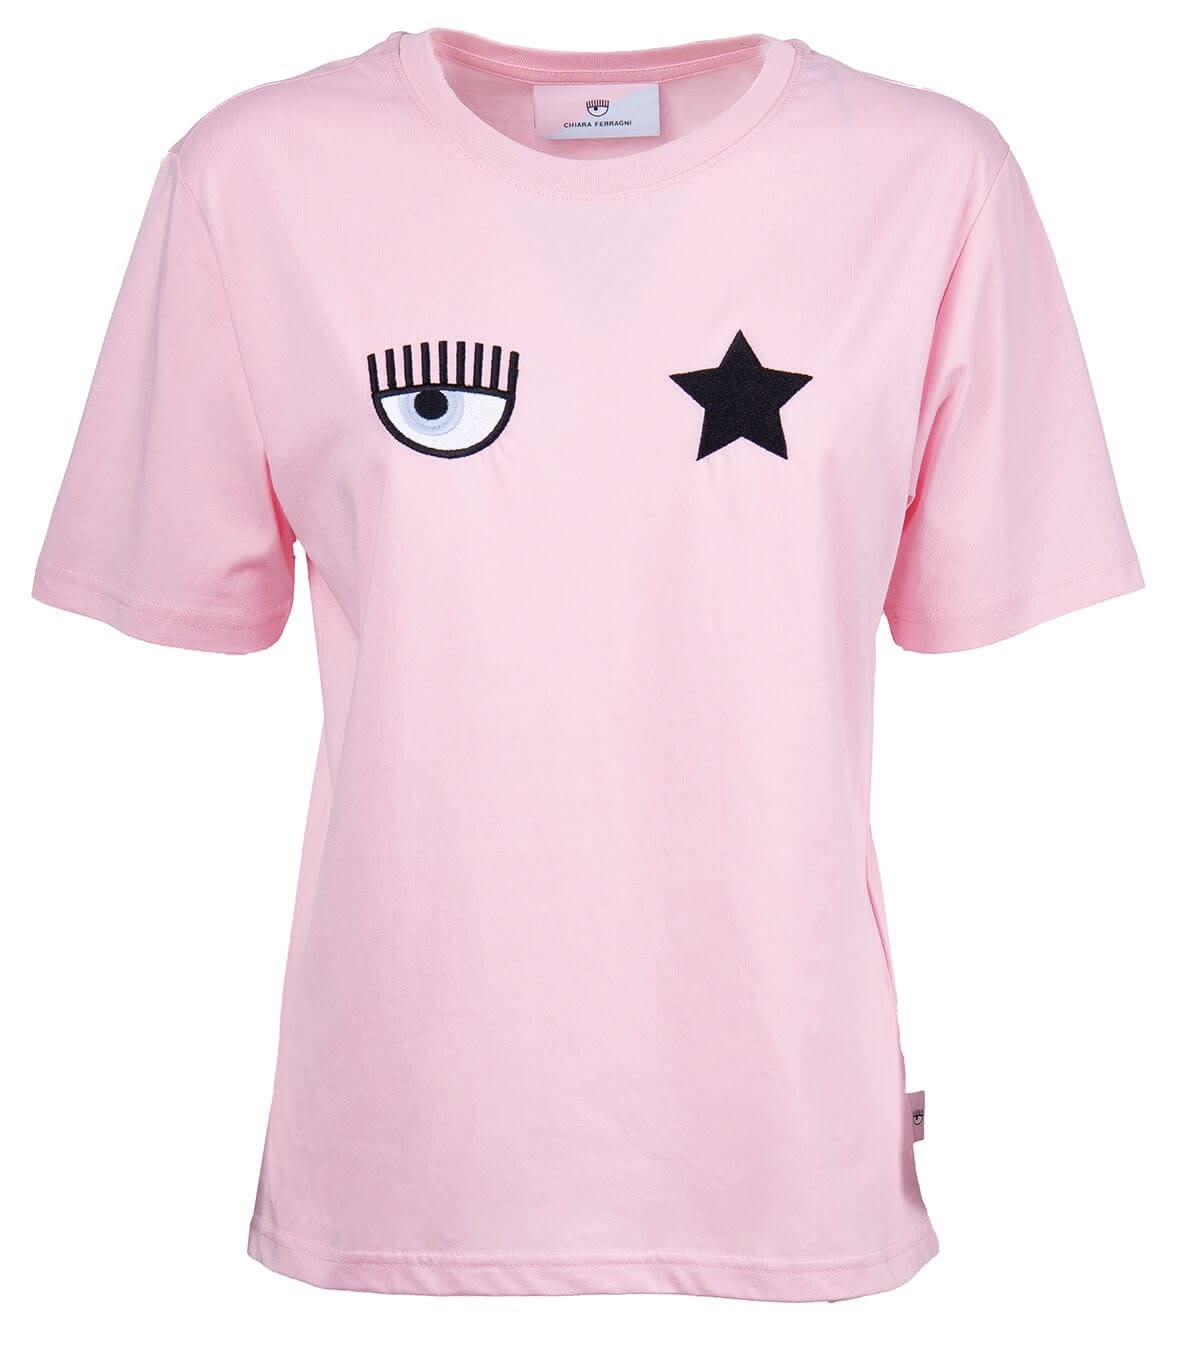 Chiara Ferragni Eyestar Pink T-shirt